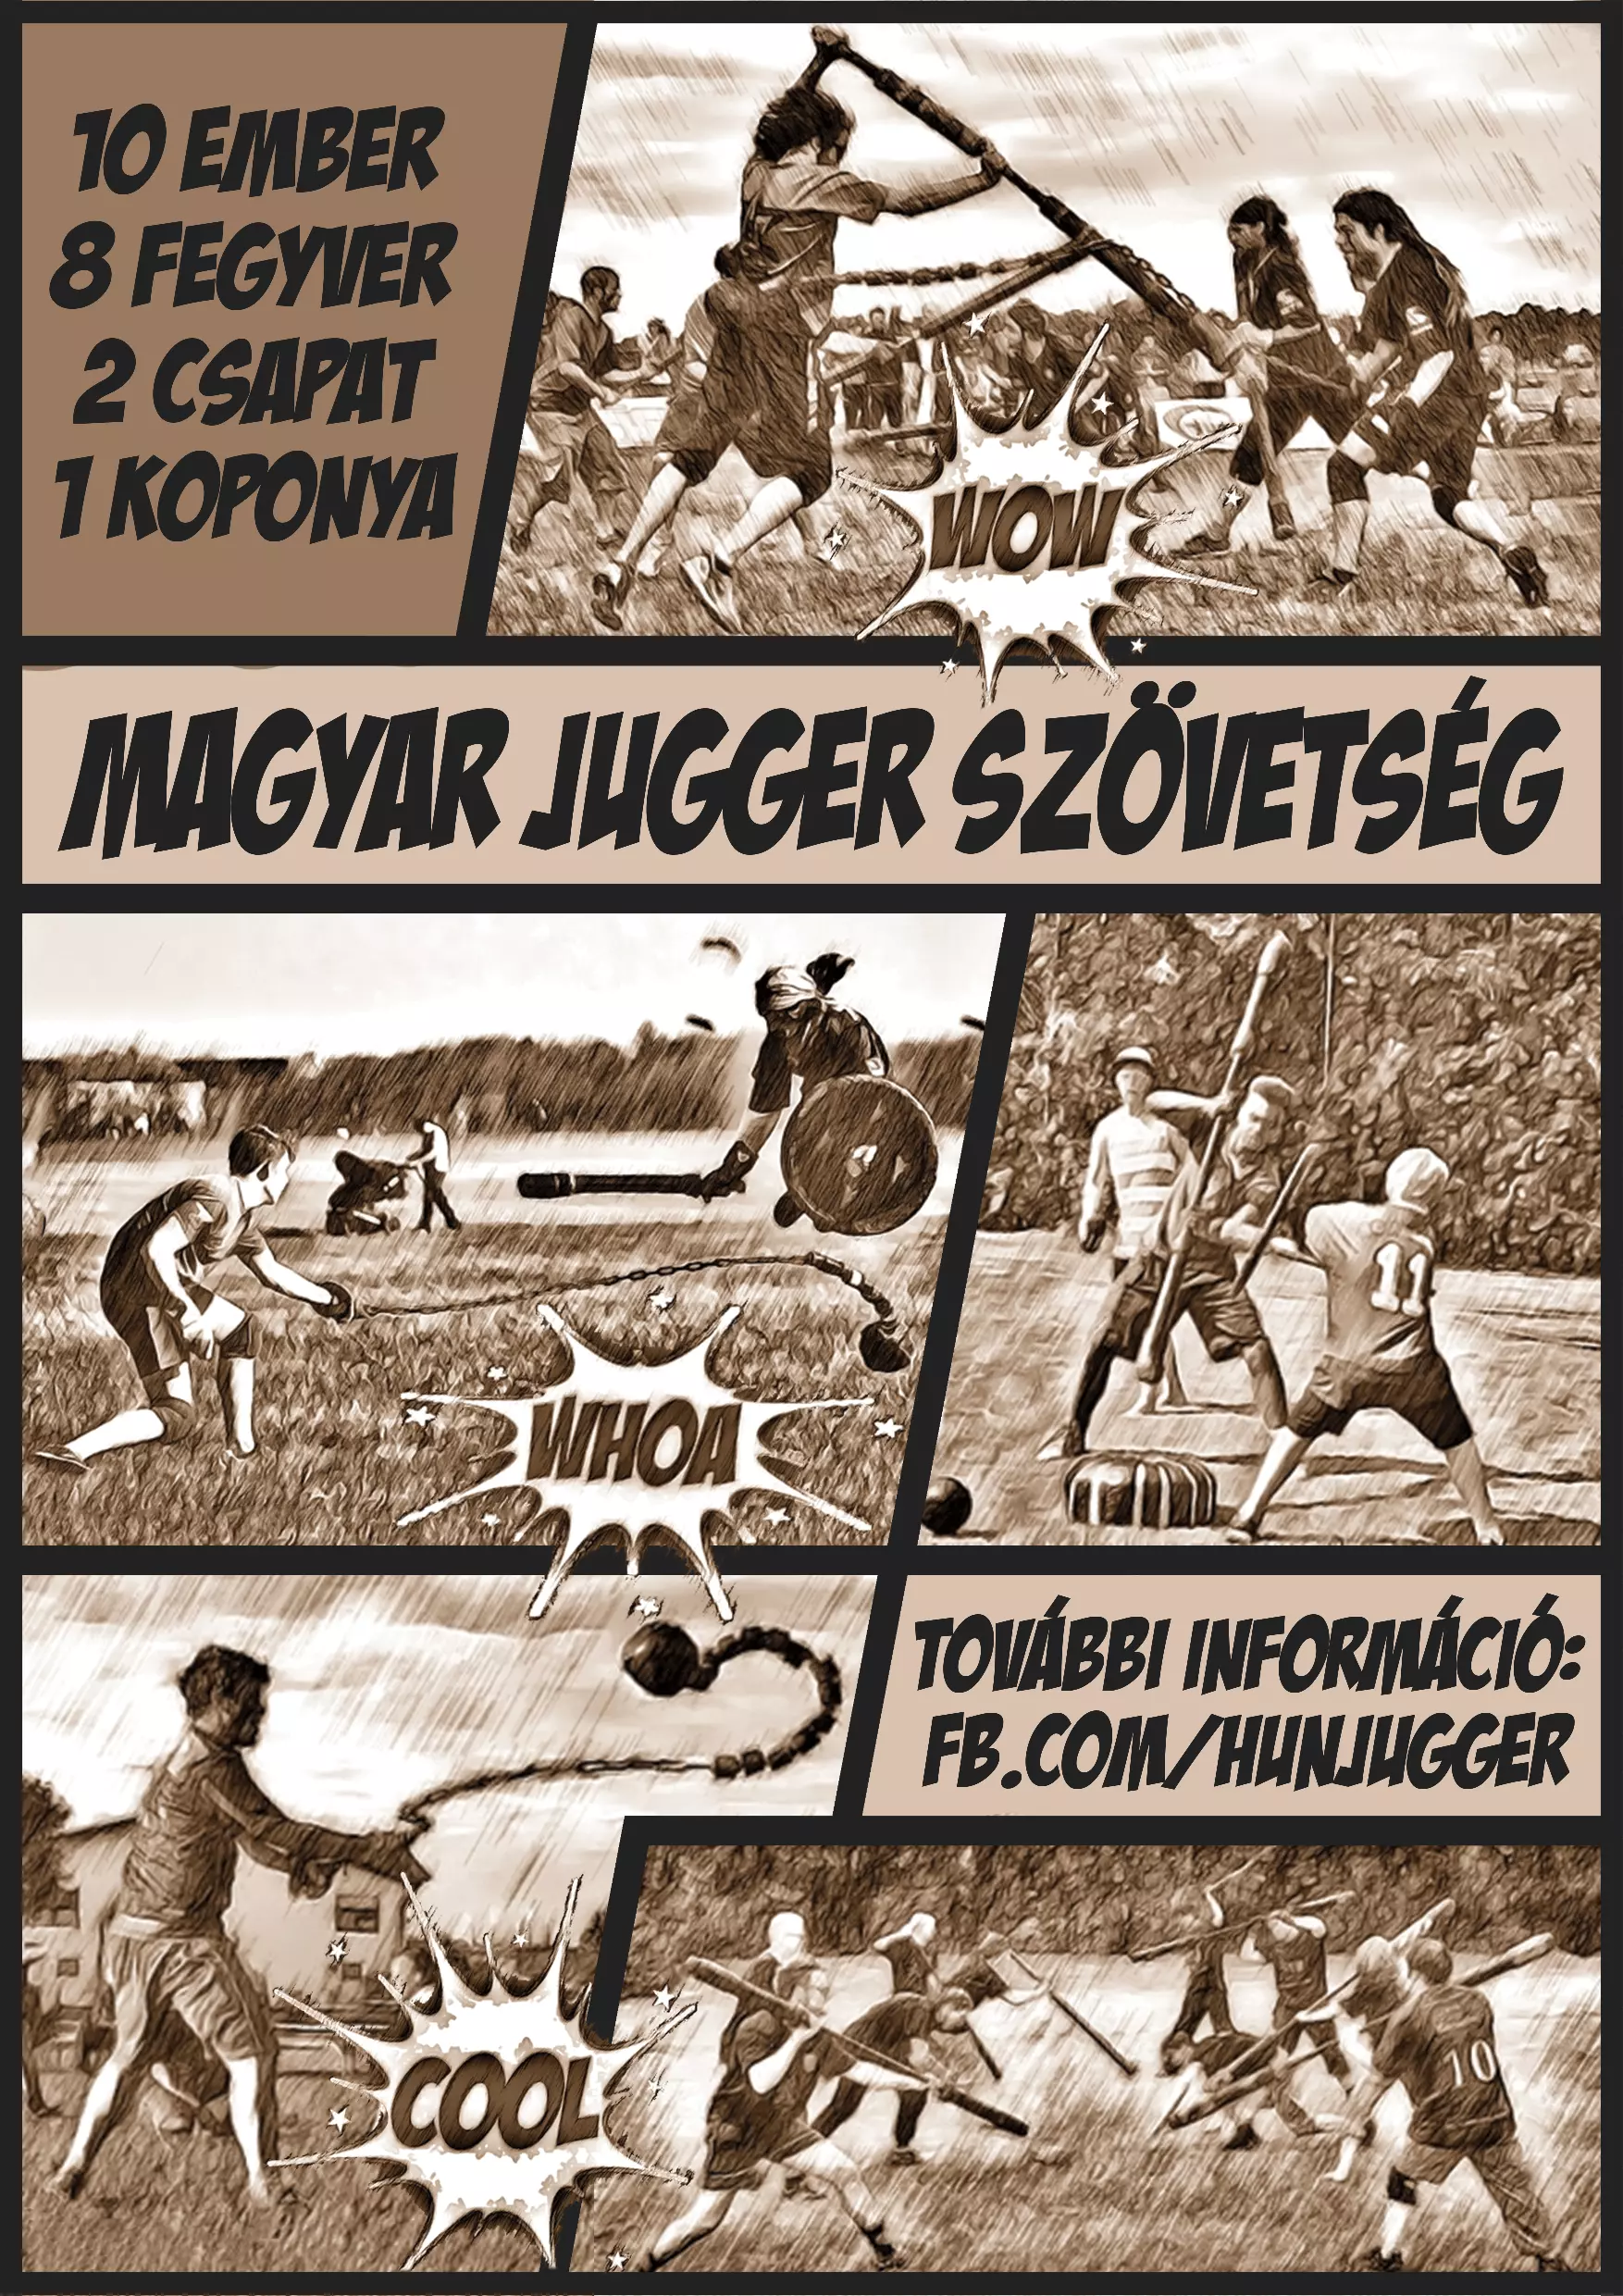 Magyar Jugger Szövetség plakát